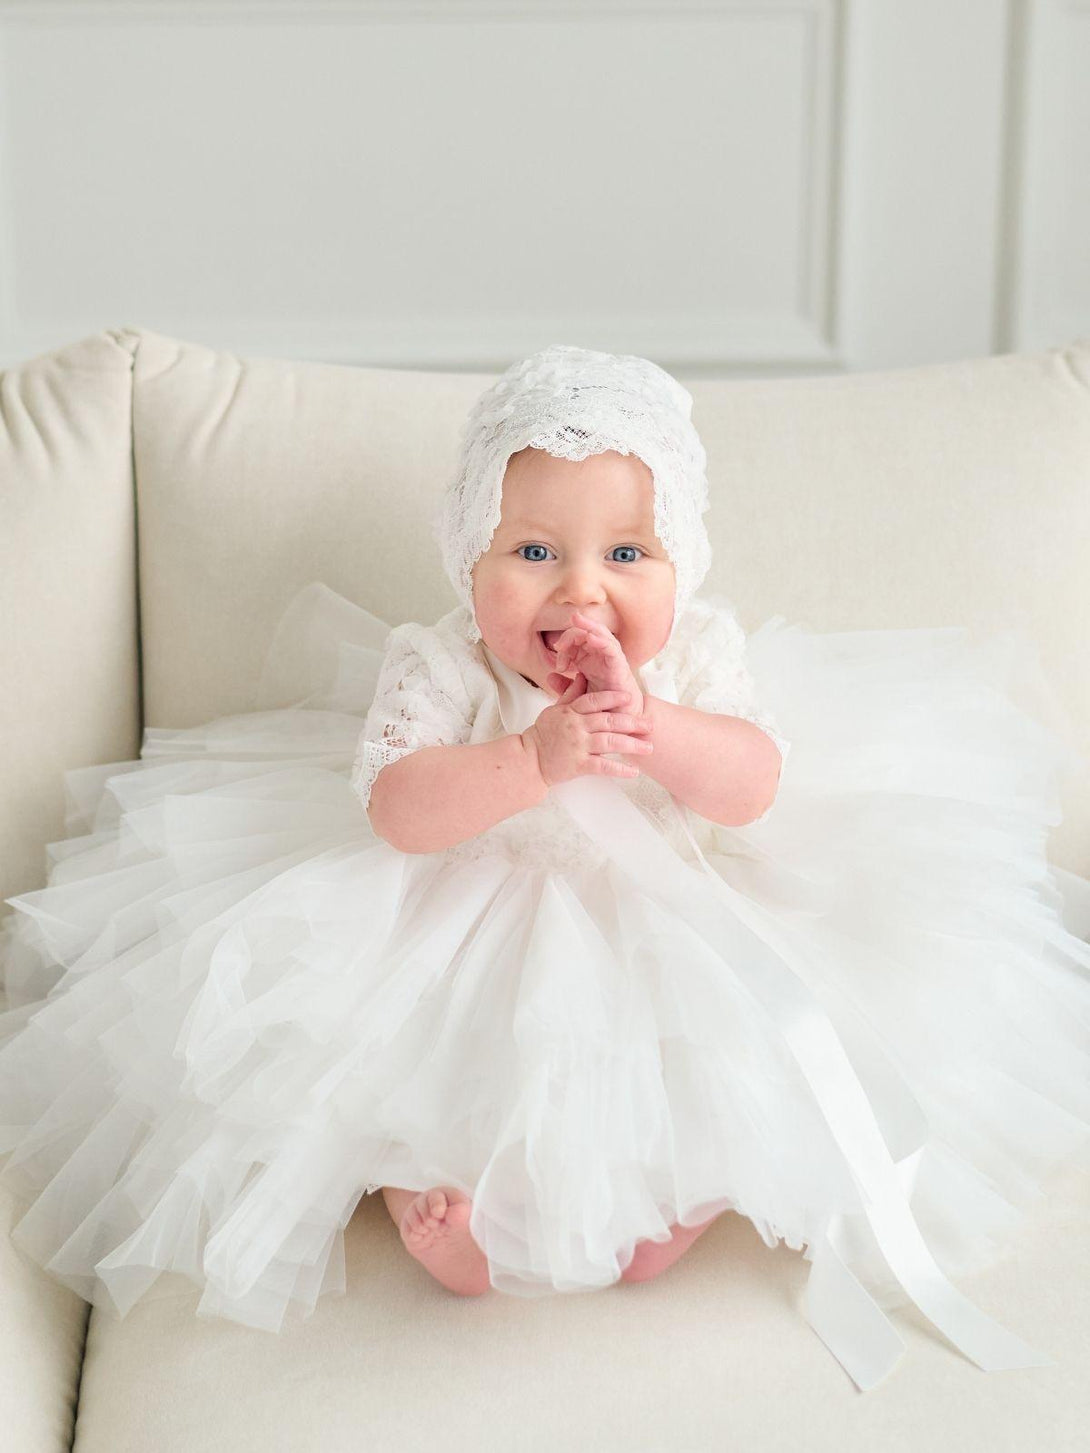 Baptism First Birthday Princess Dress in New Jersey